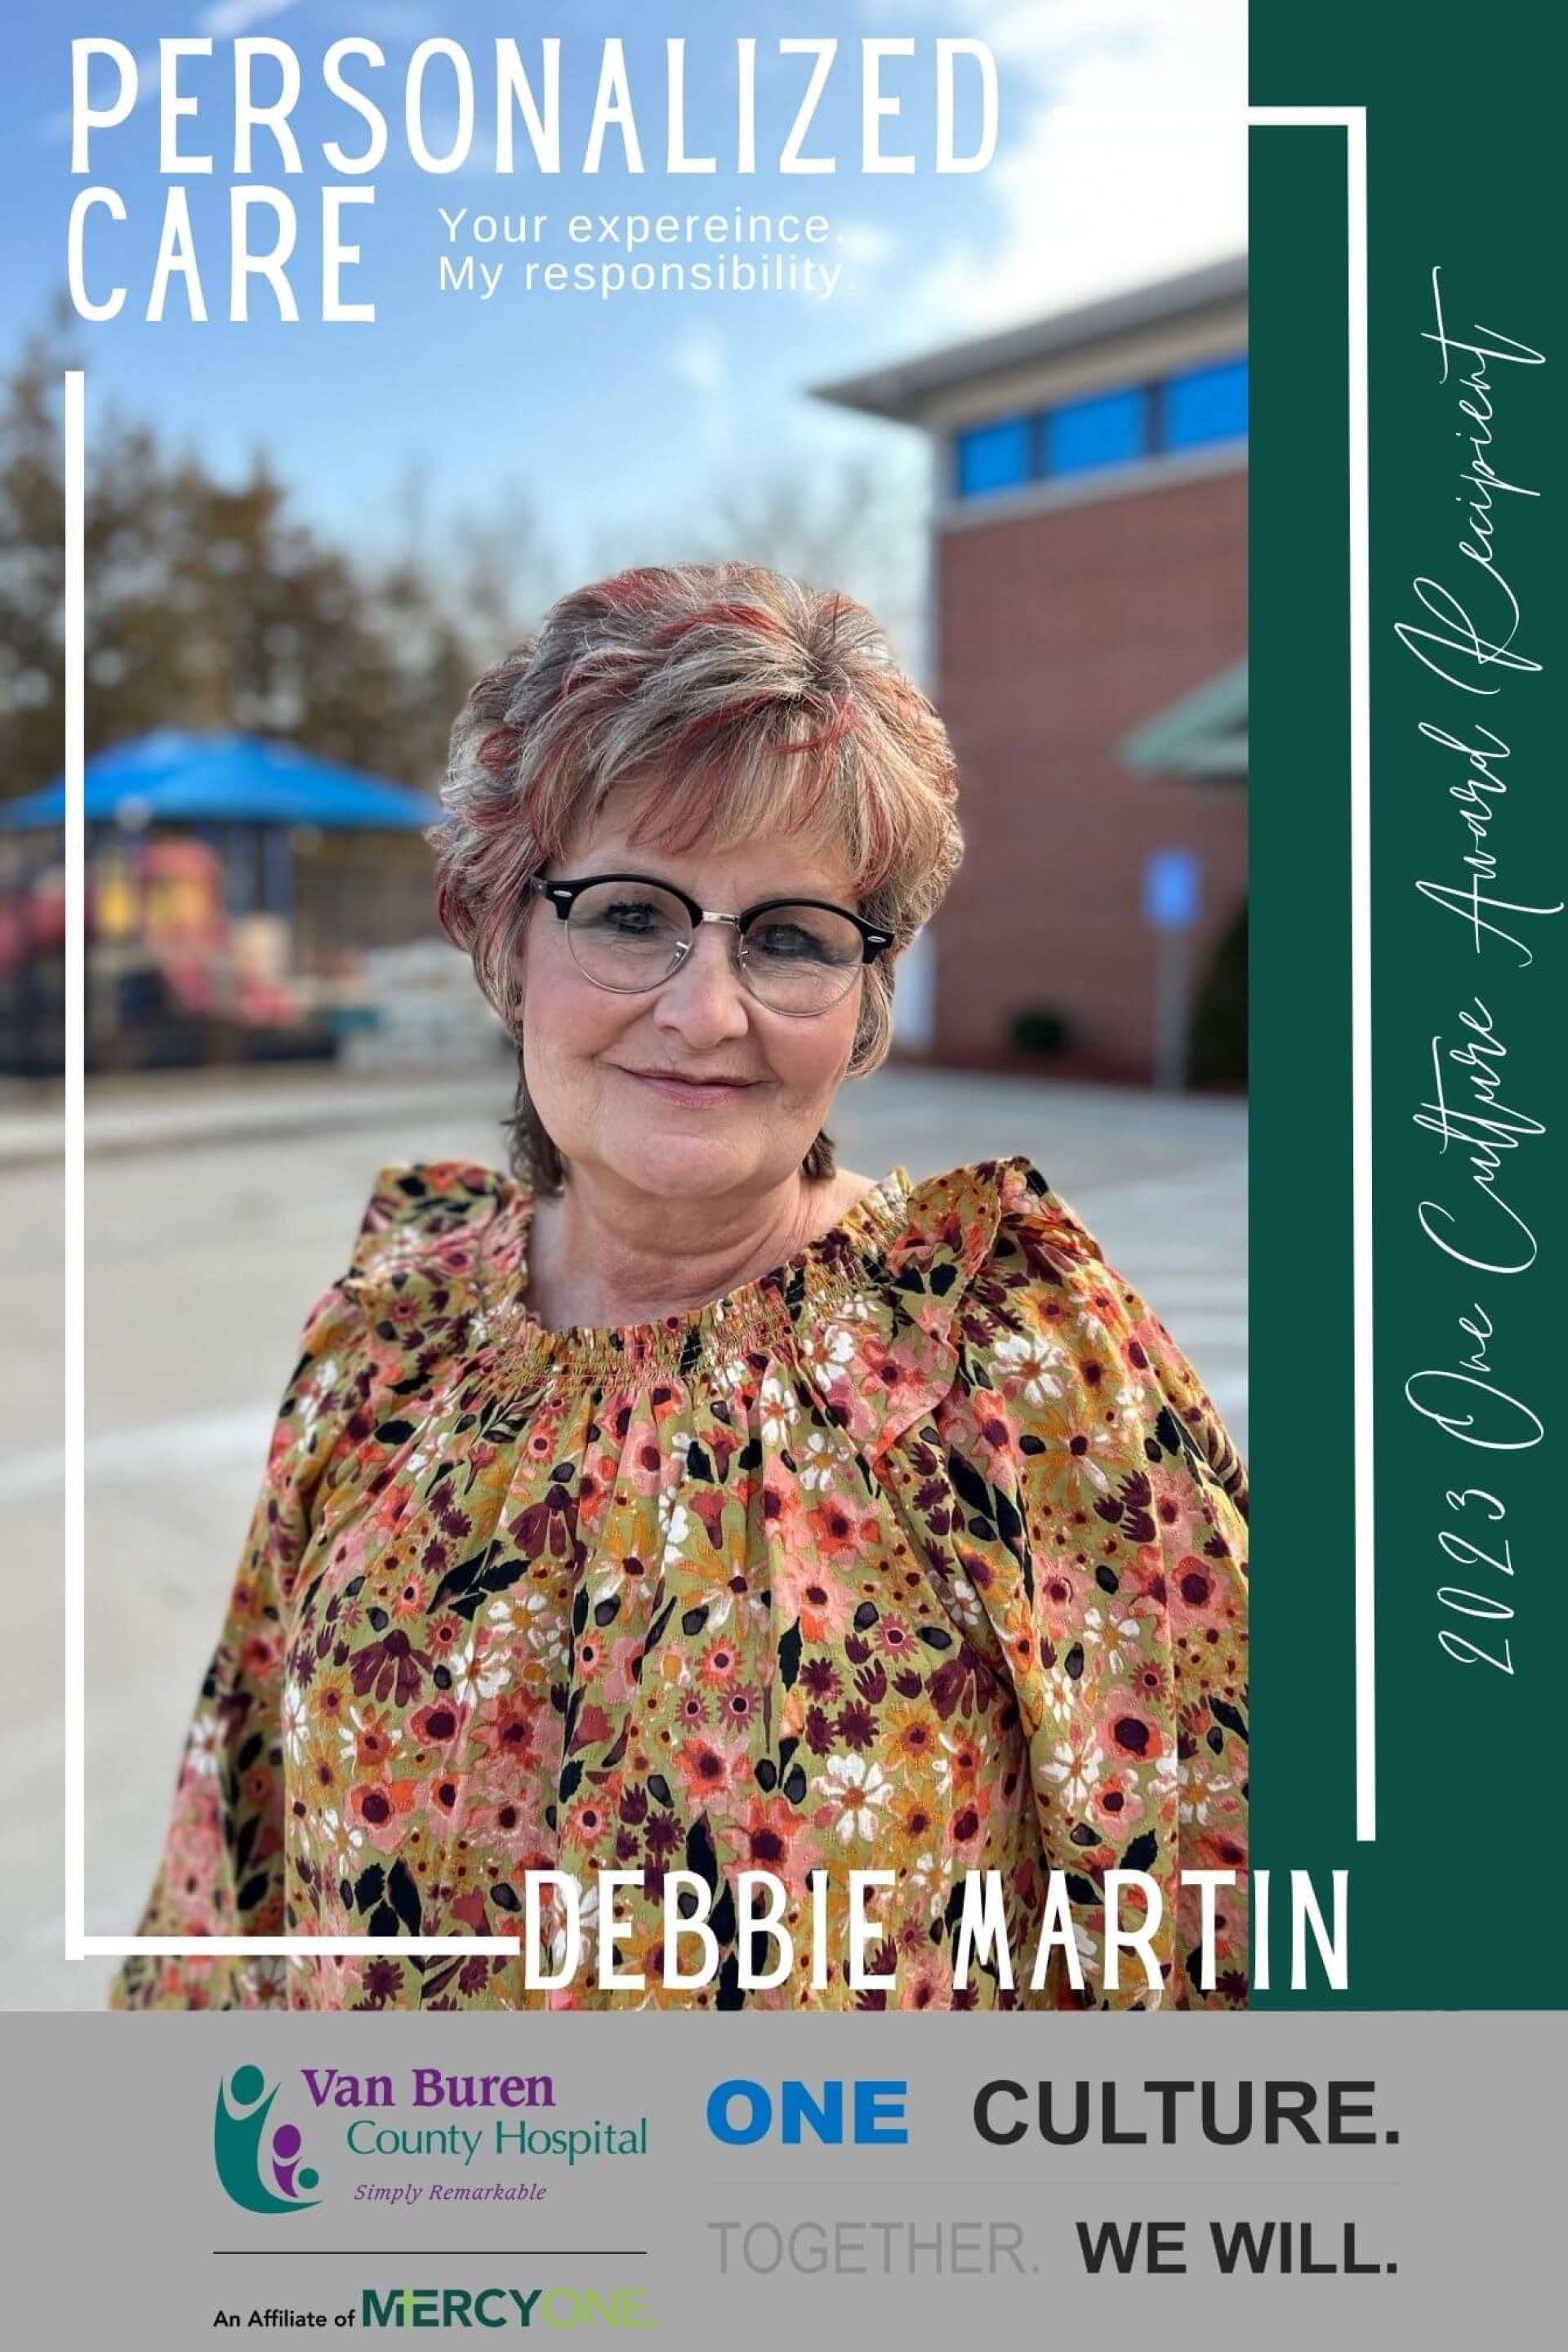 Debbie Martin: Personalized Care One Culture Award recipient.